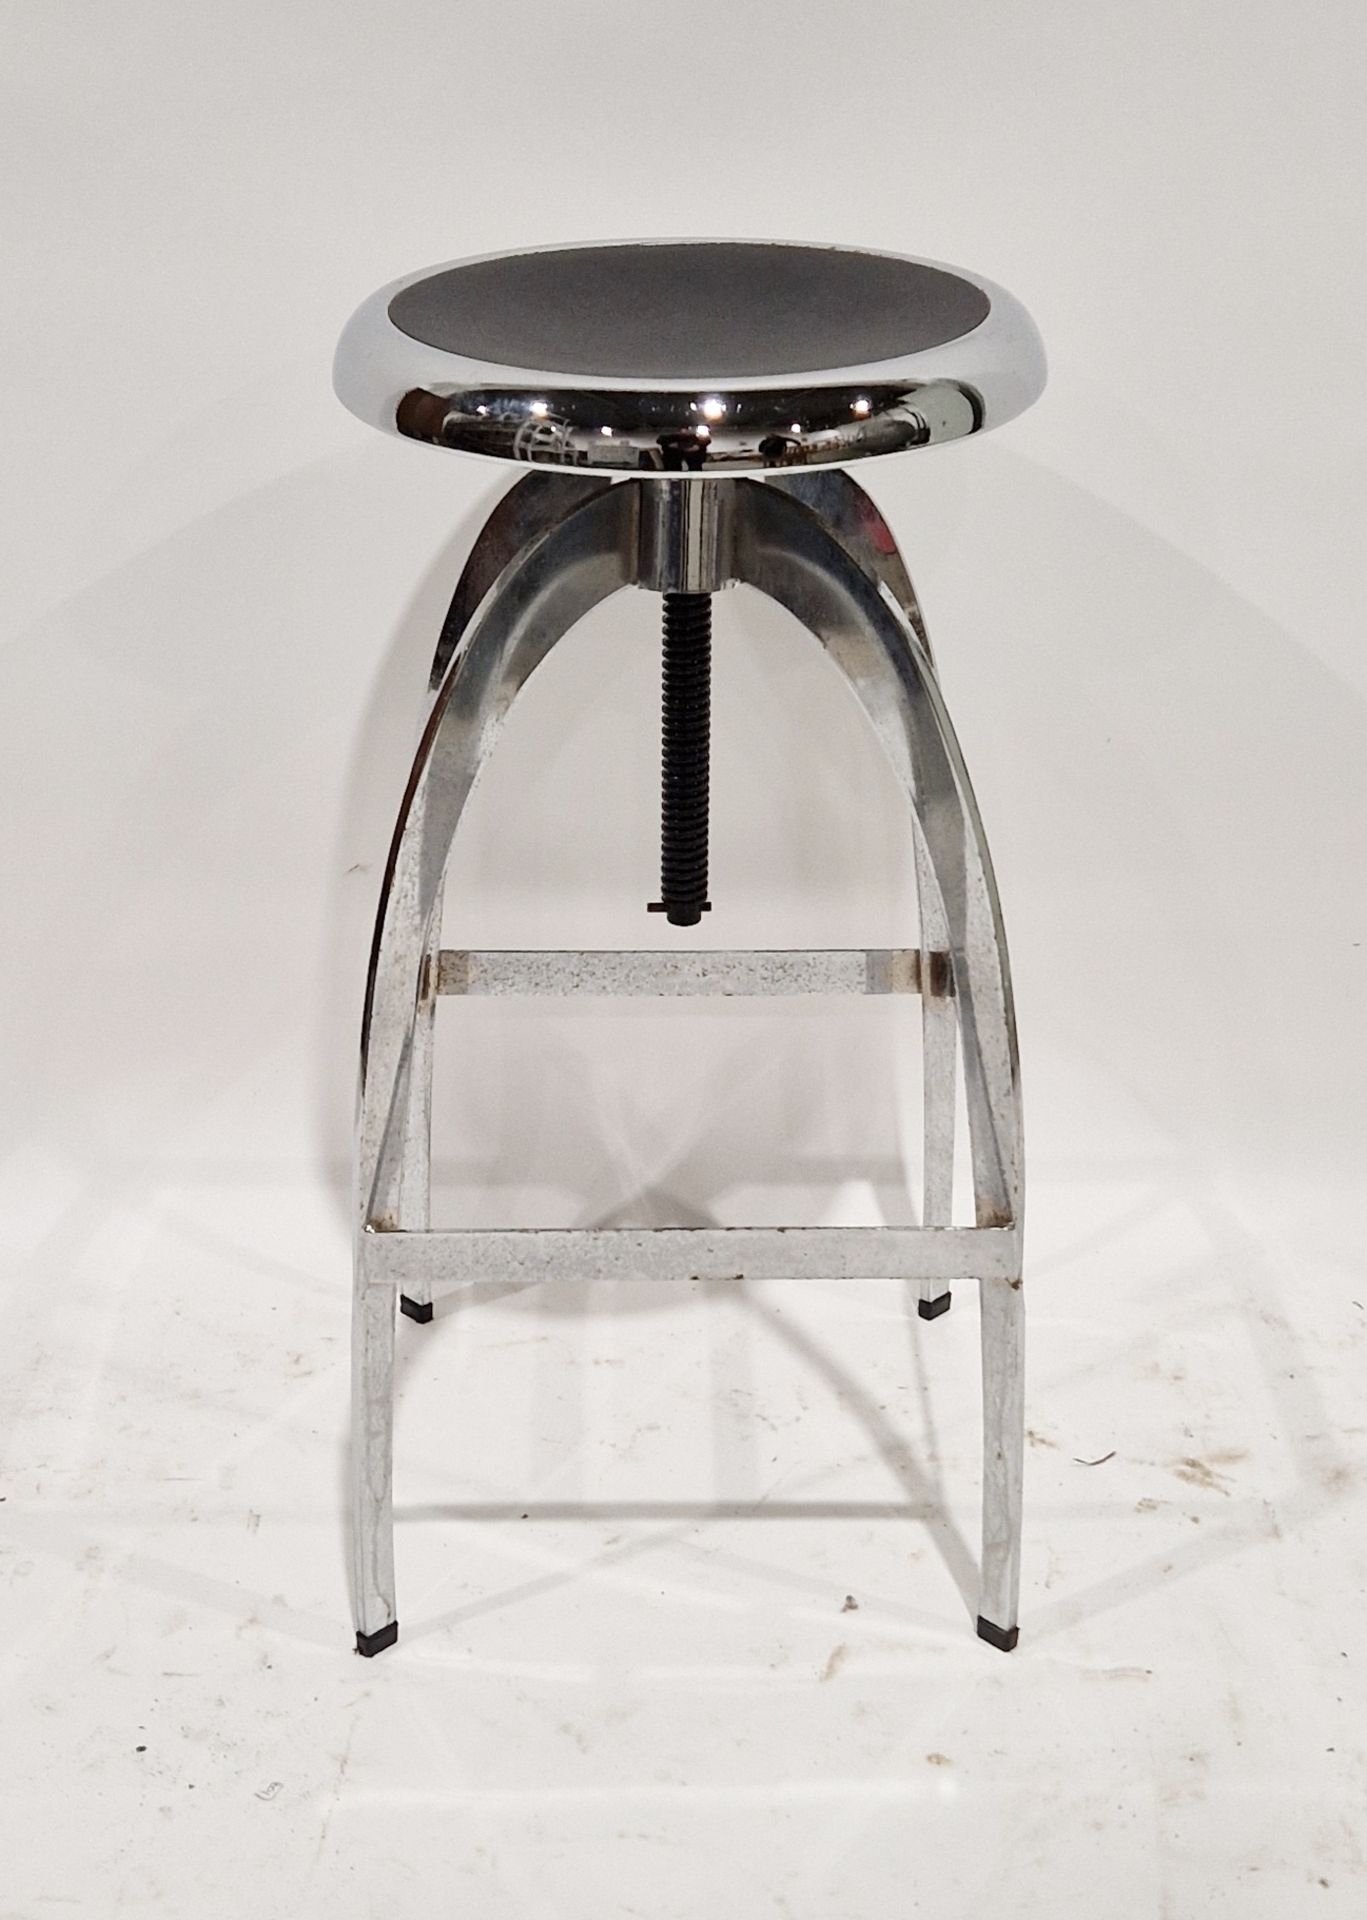 Modern chrome adjustable bar stool, 68cm high - Image 3 of 4